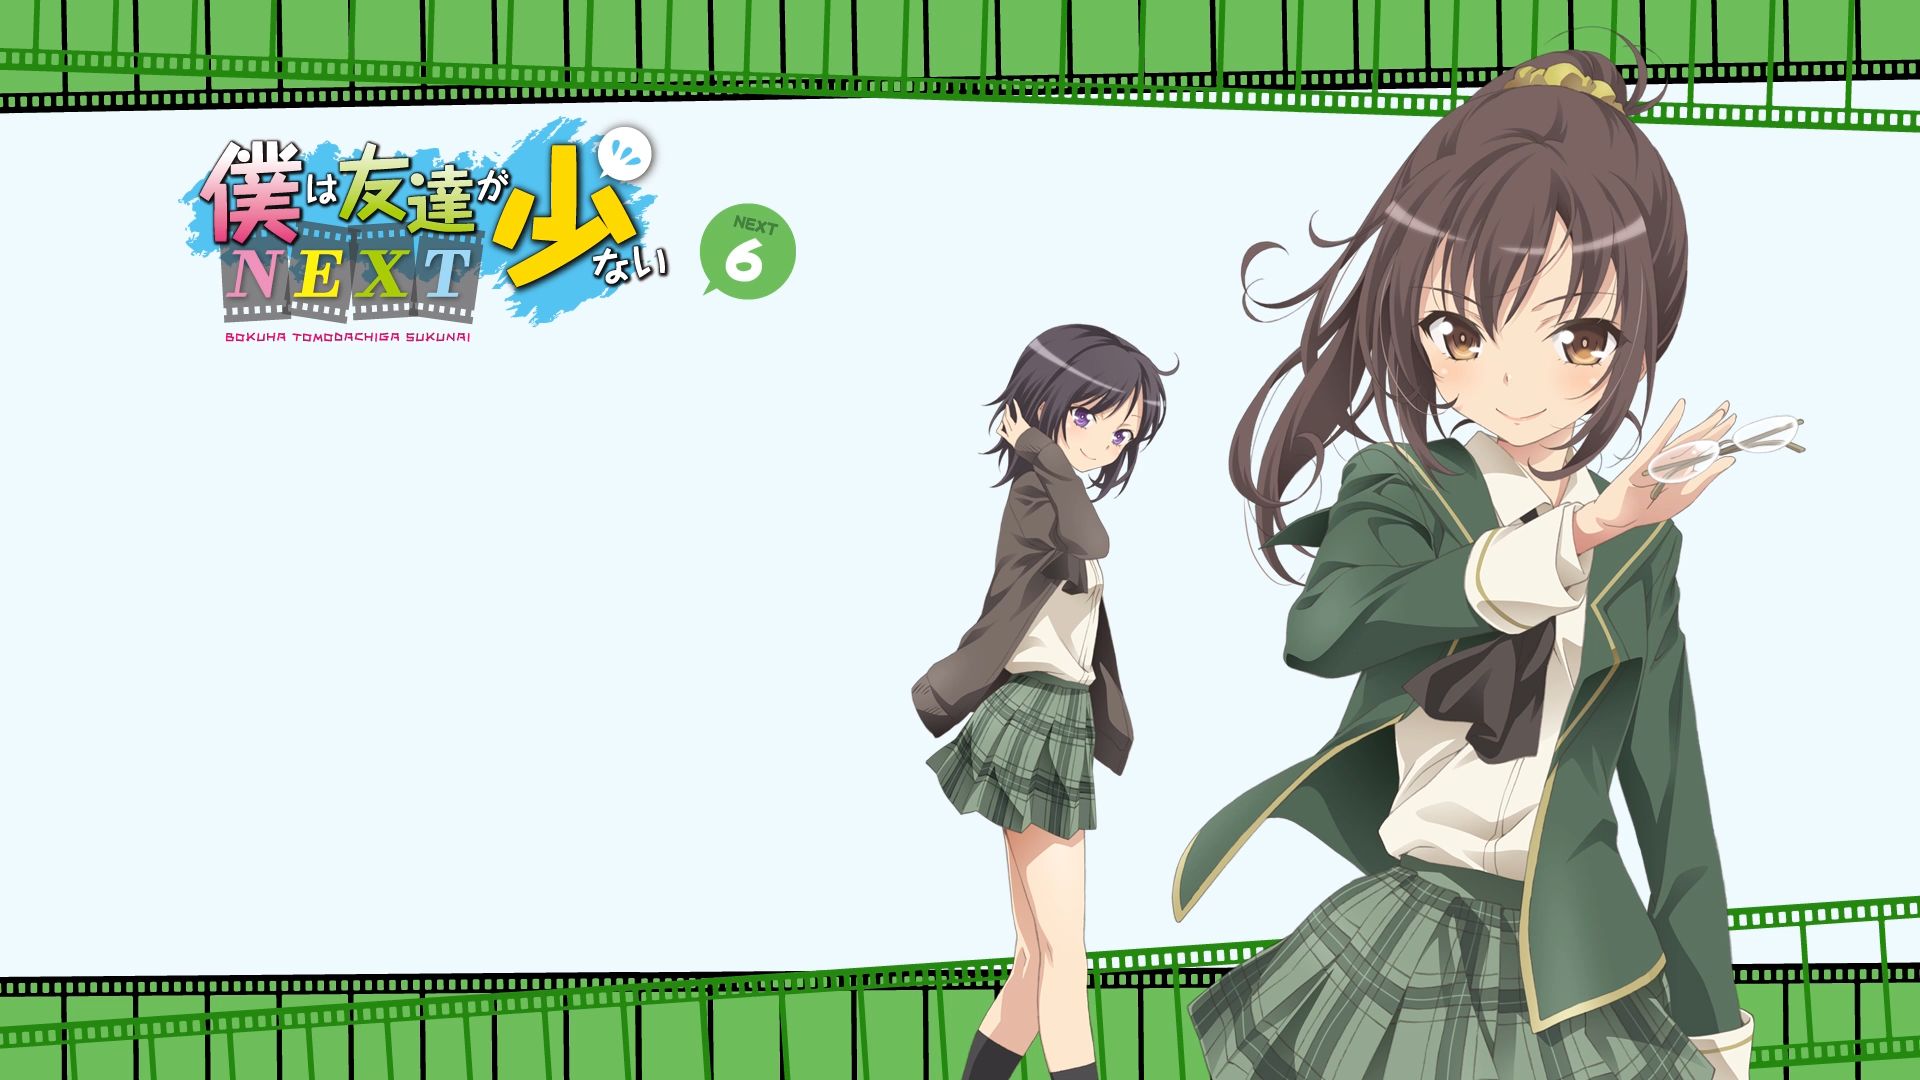 774226 descargar imagen animado, boku wa tomodachi ga sukunai, yozora mikazuki: fondos de pantalla y protectores de pantalla gratis